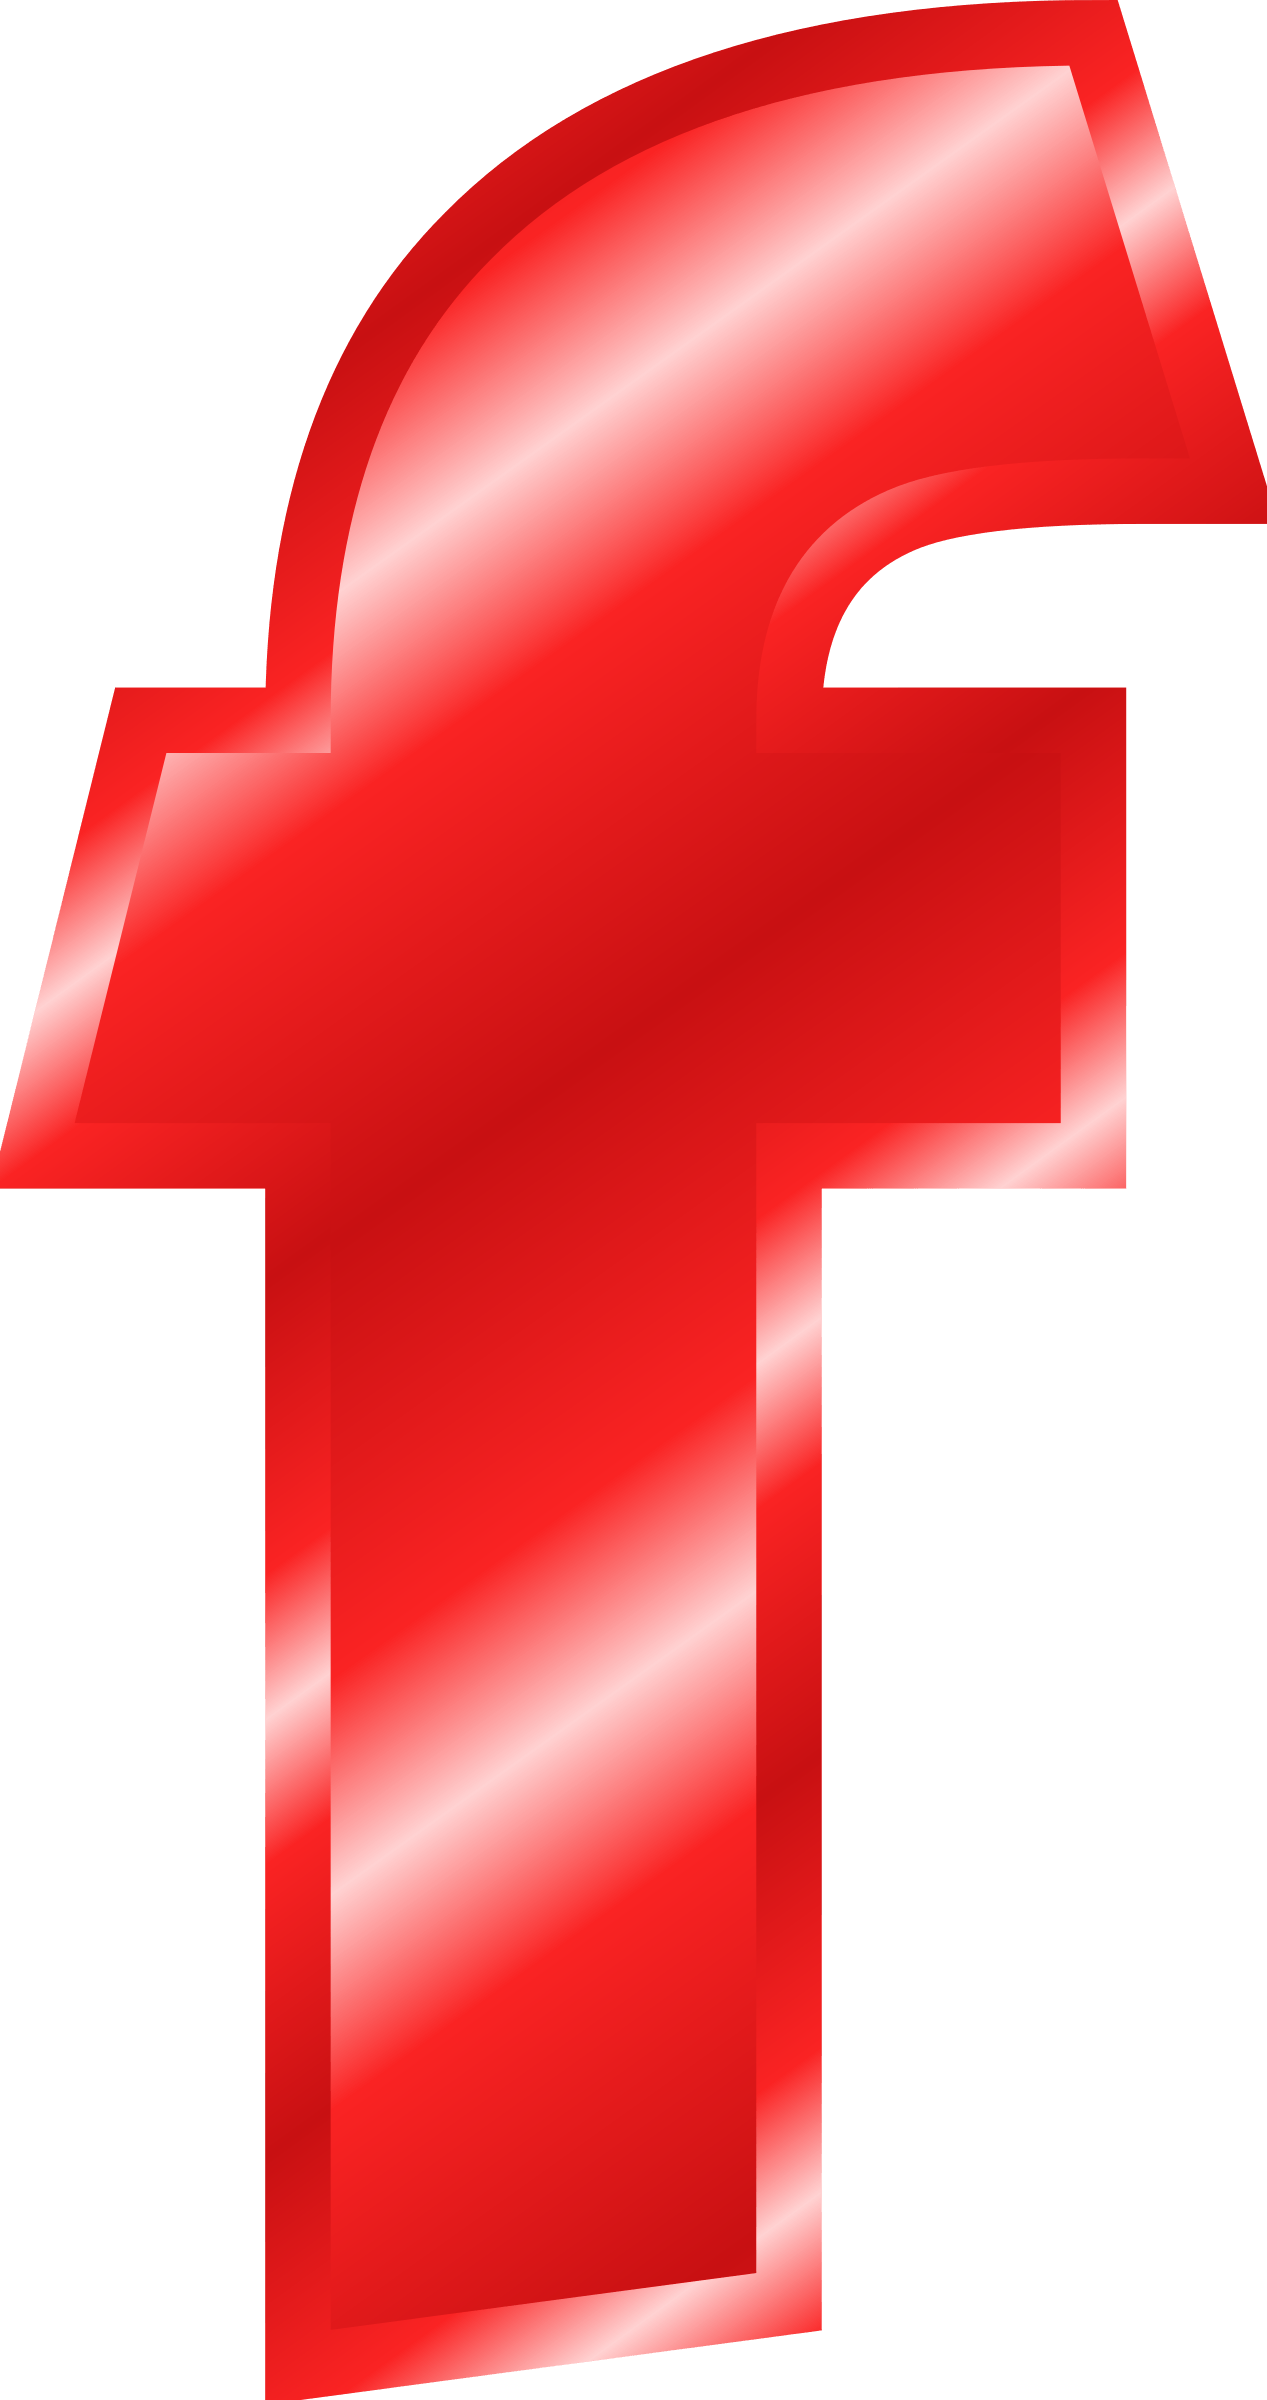 Red Letter F Logo - Letter F PNG image free download